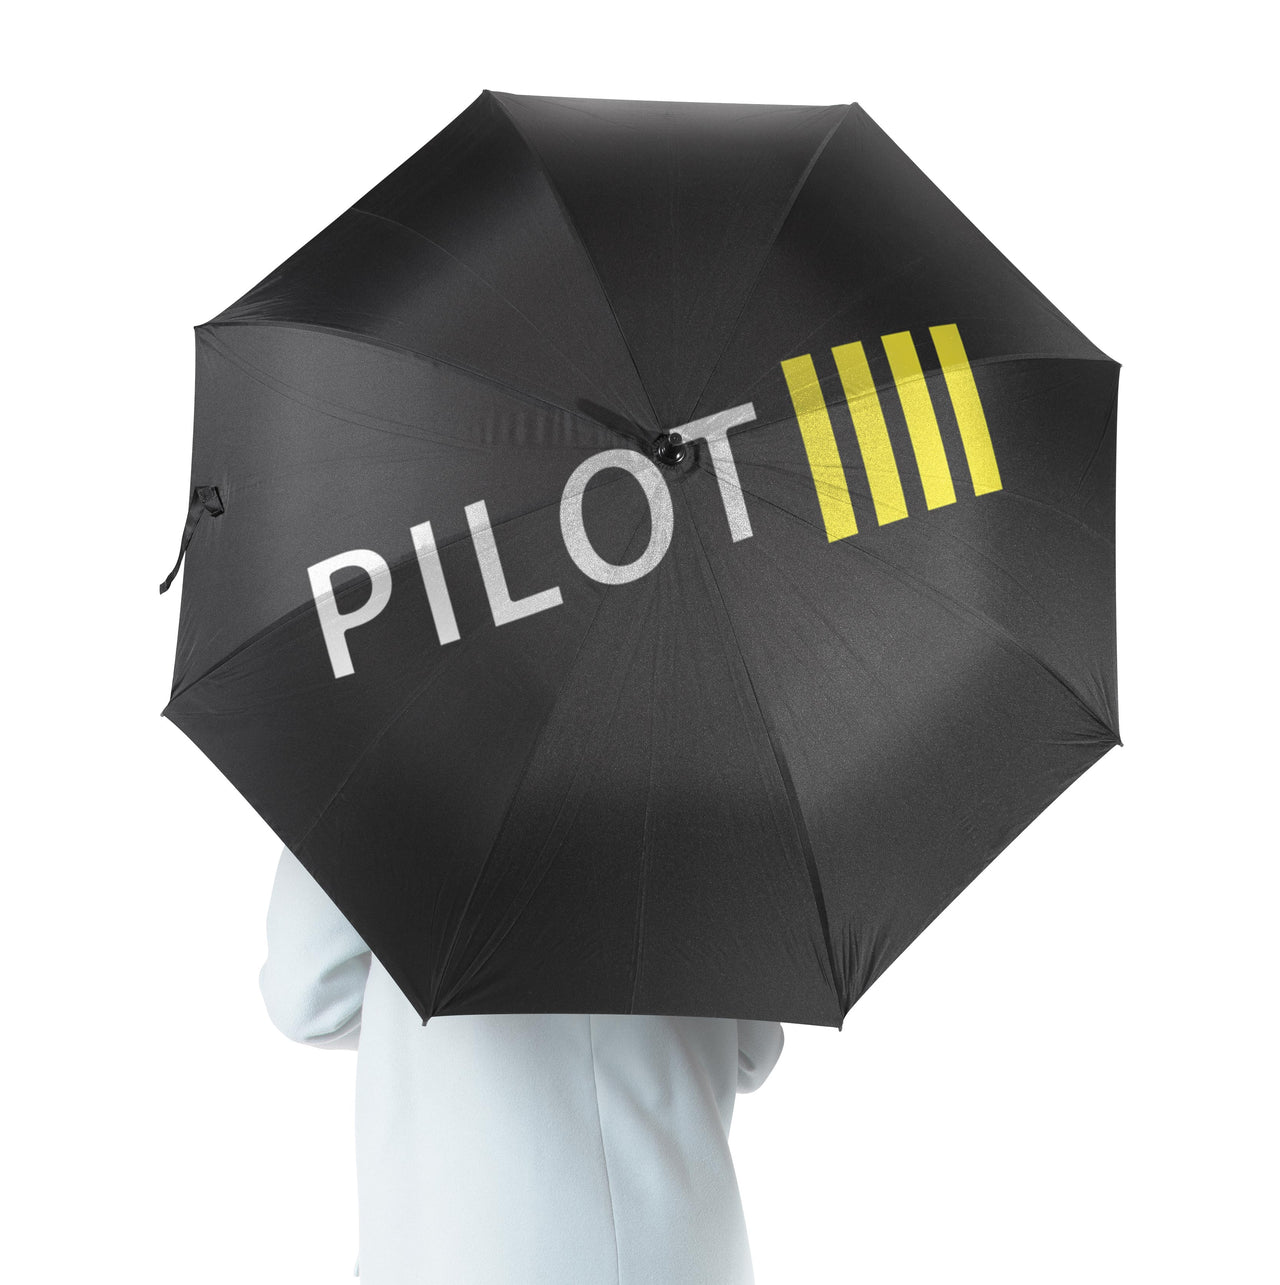 Pilot & Stripes (4 Lines) Designed Umbrella